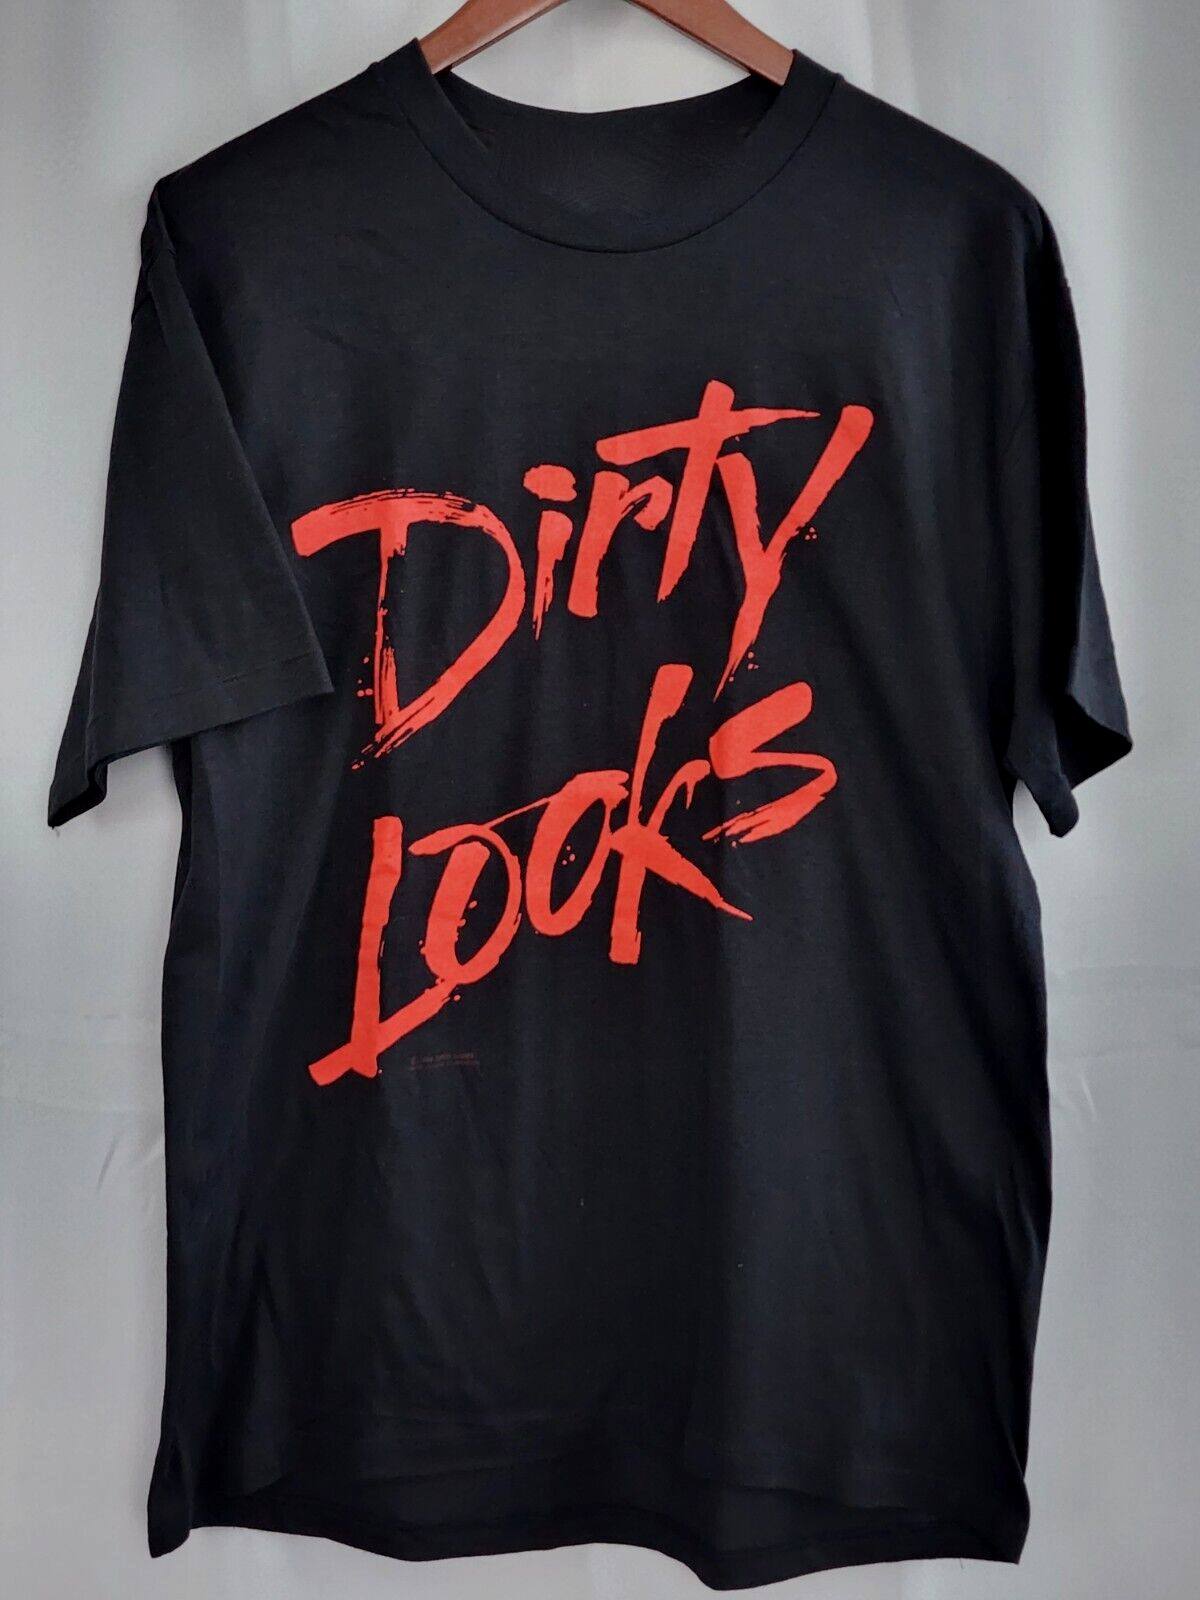 Vtg Dirty Looks Turn of the Screw Tour Cotton Black S-5XL Unisex Shirt AP206